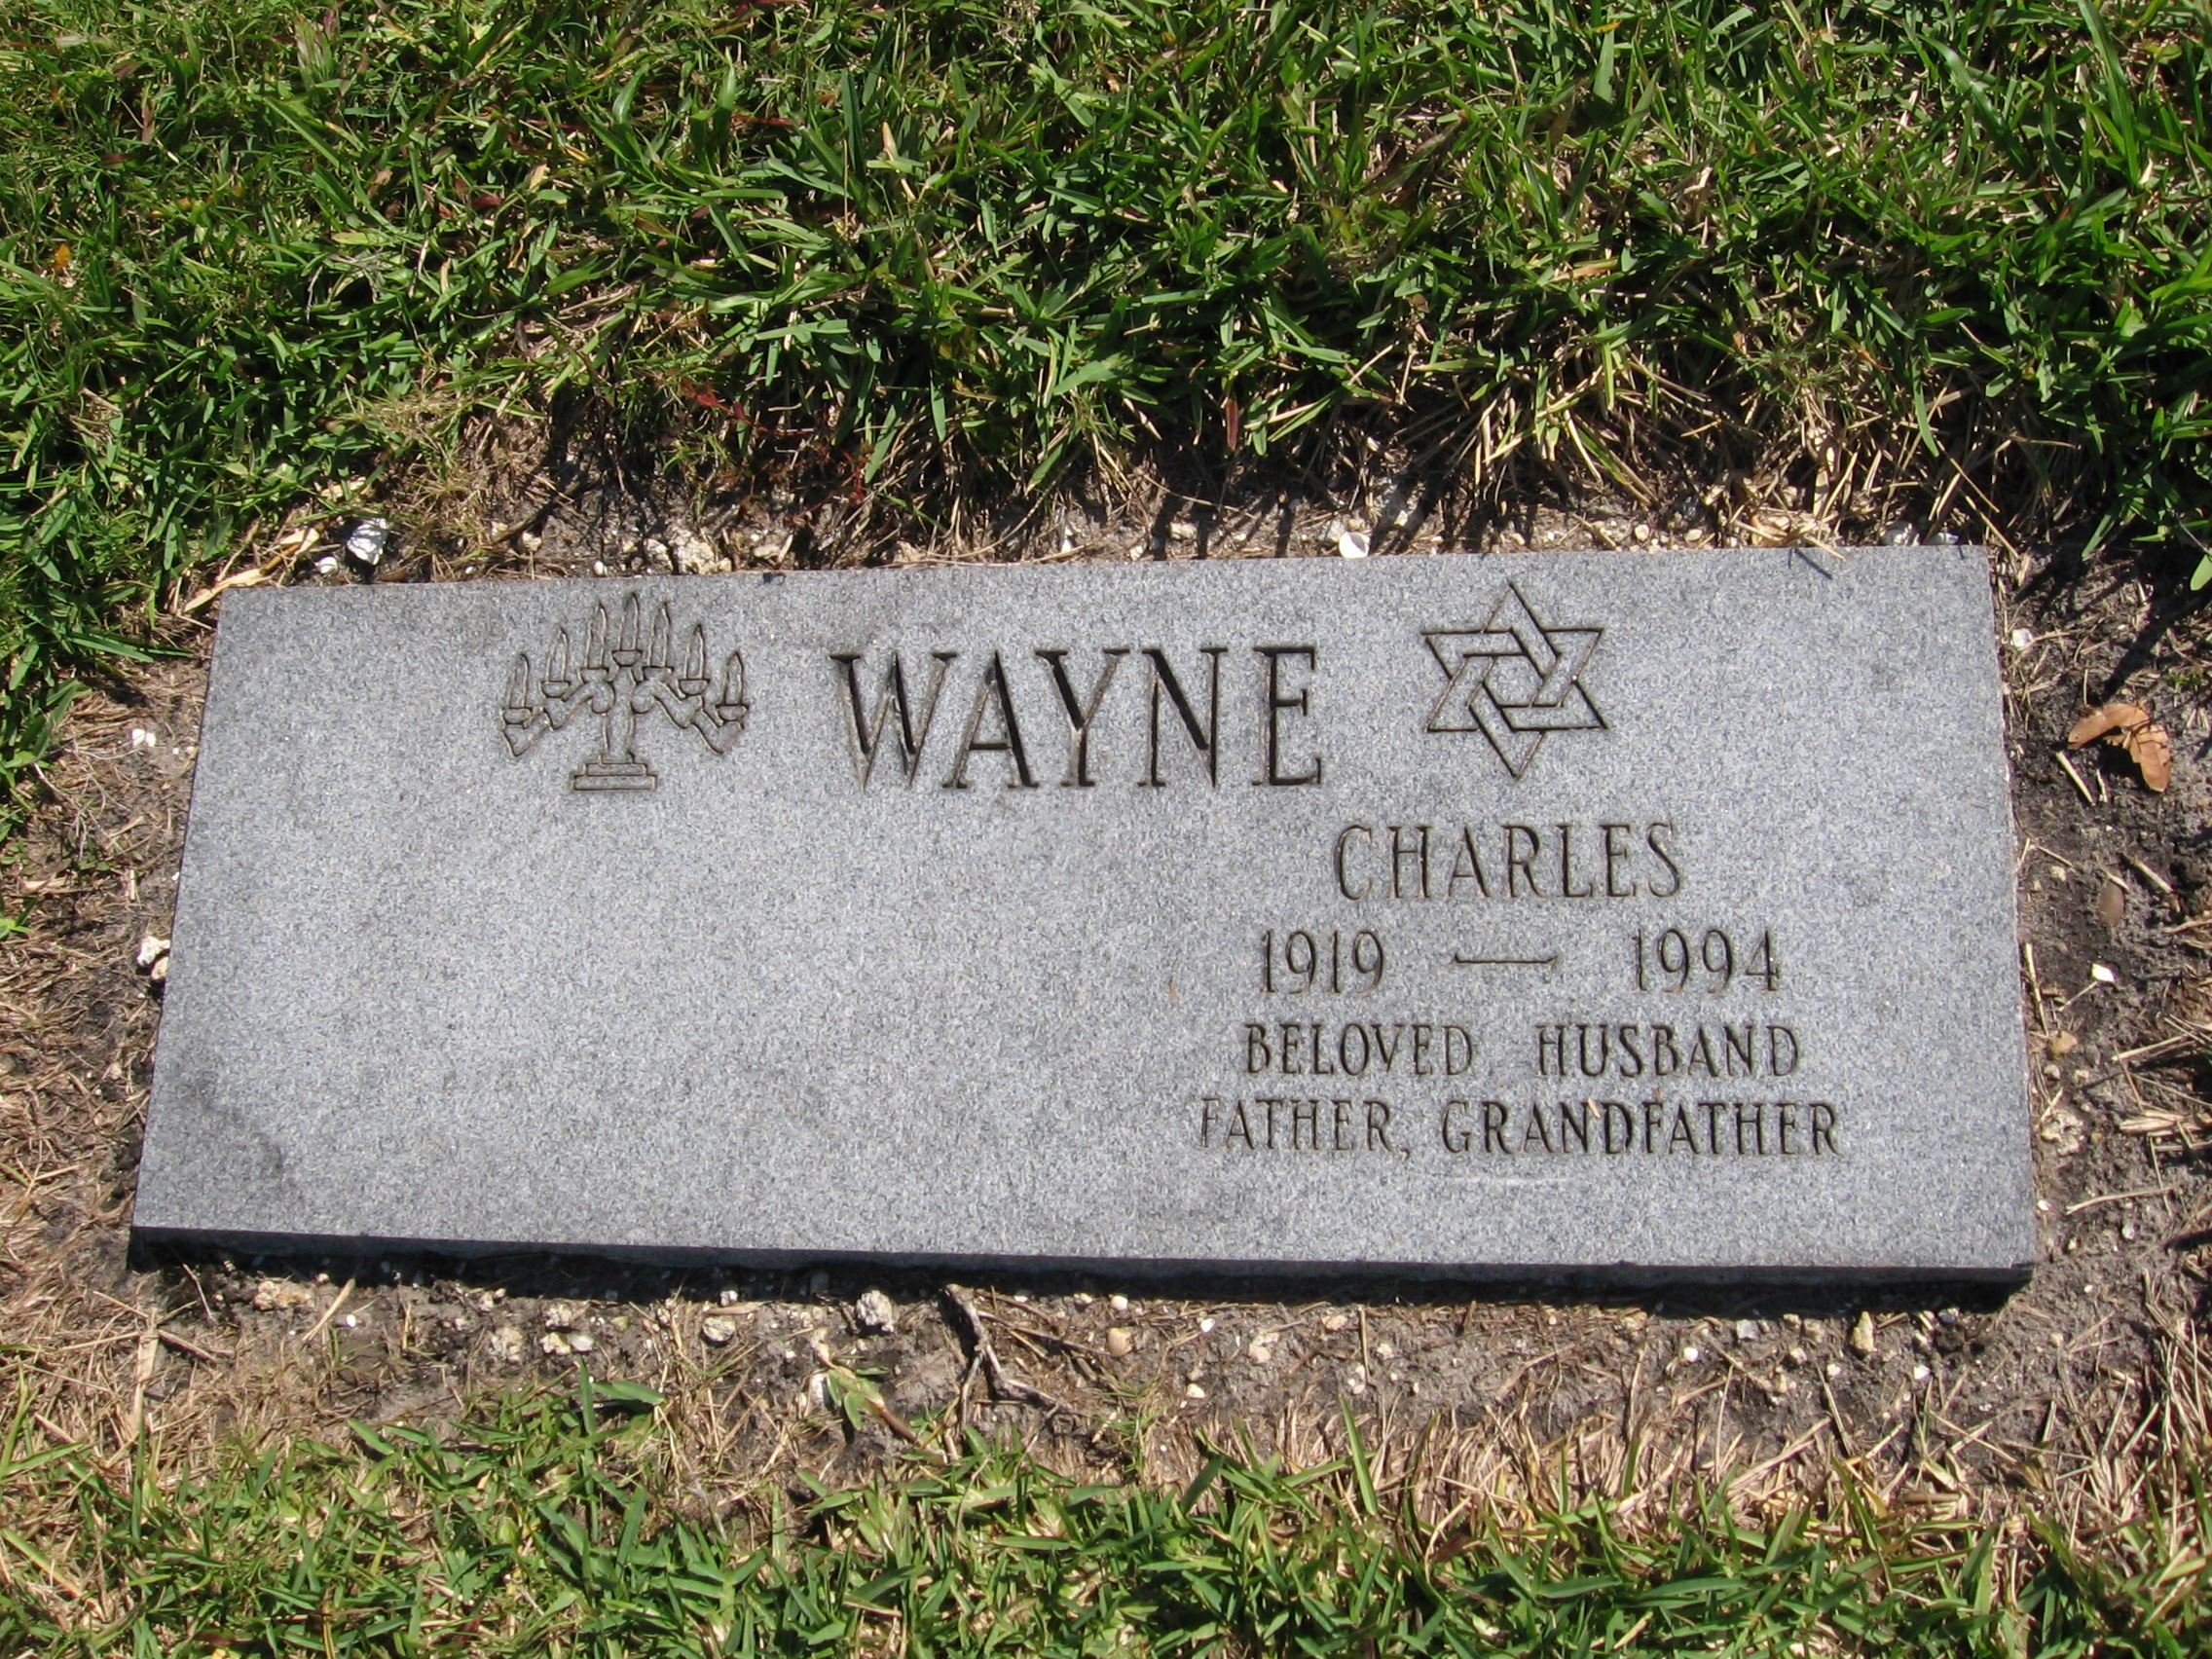 Charles Wayne